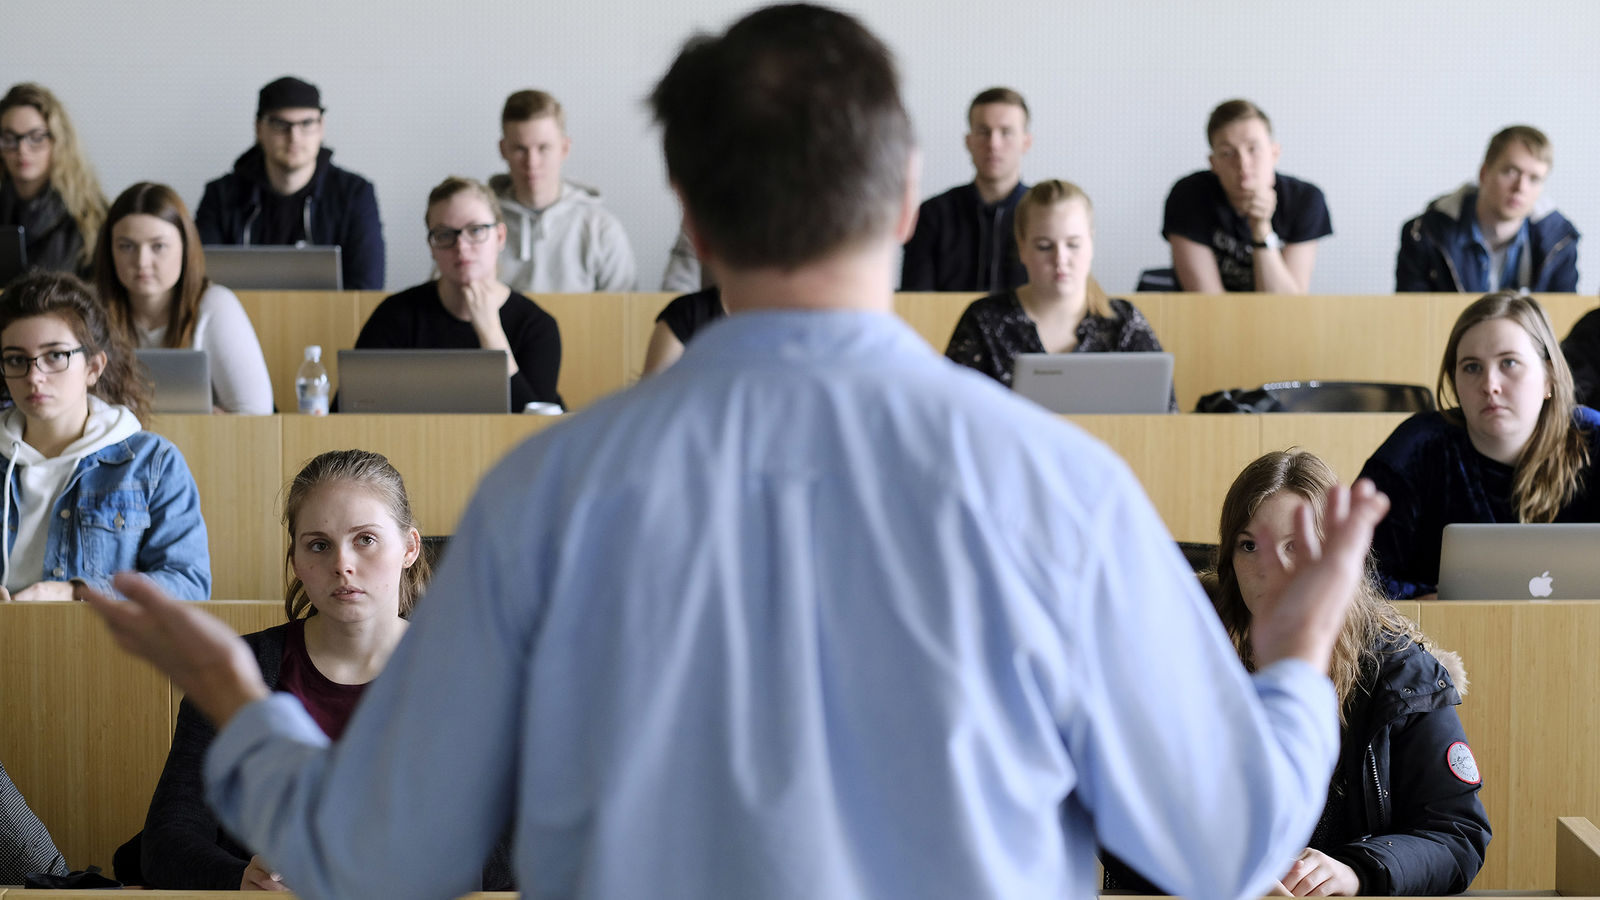 A teacher stands in front of a class